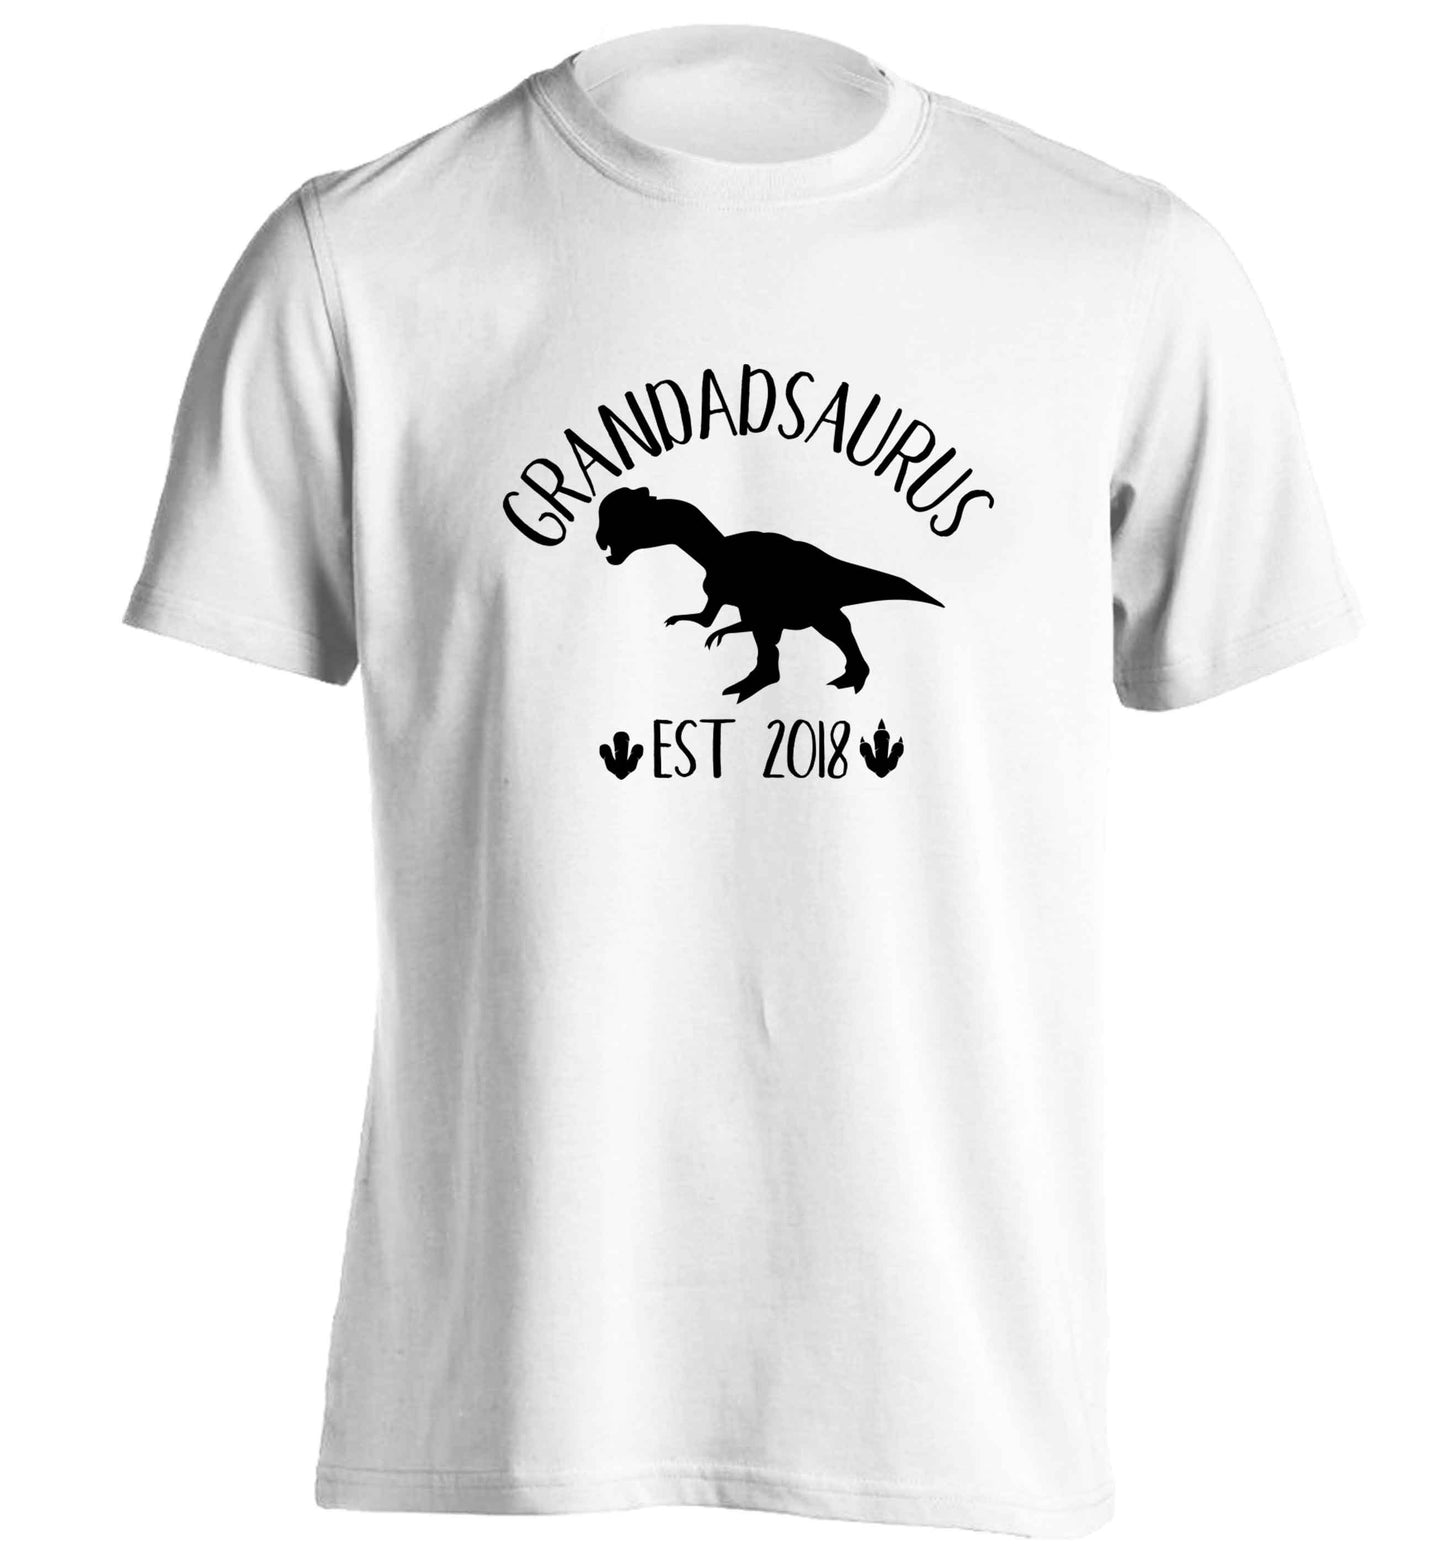 Personalised grandadsaurus since (custom date) adults unisex white Tshirt 2XL